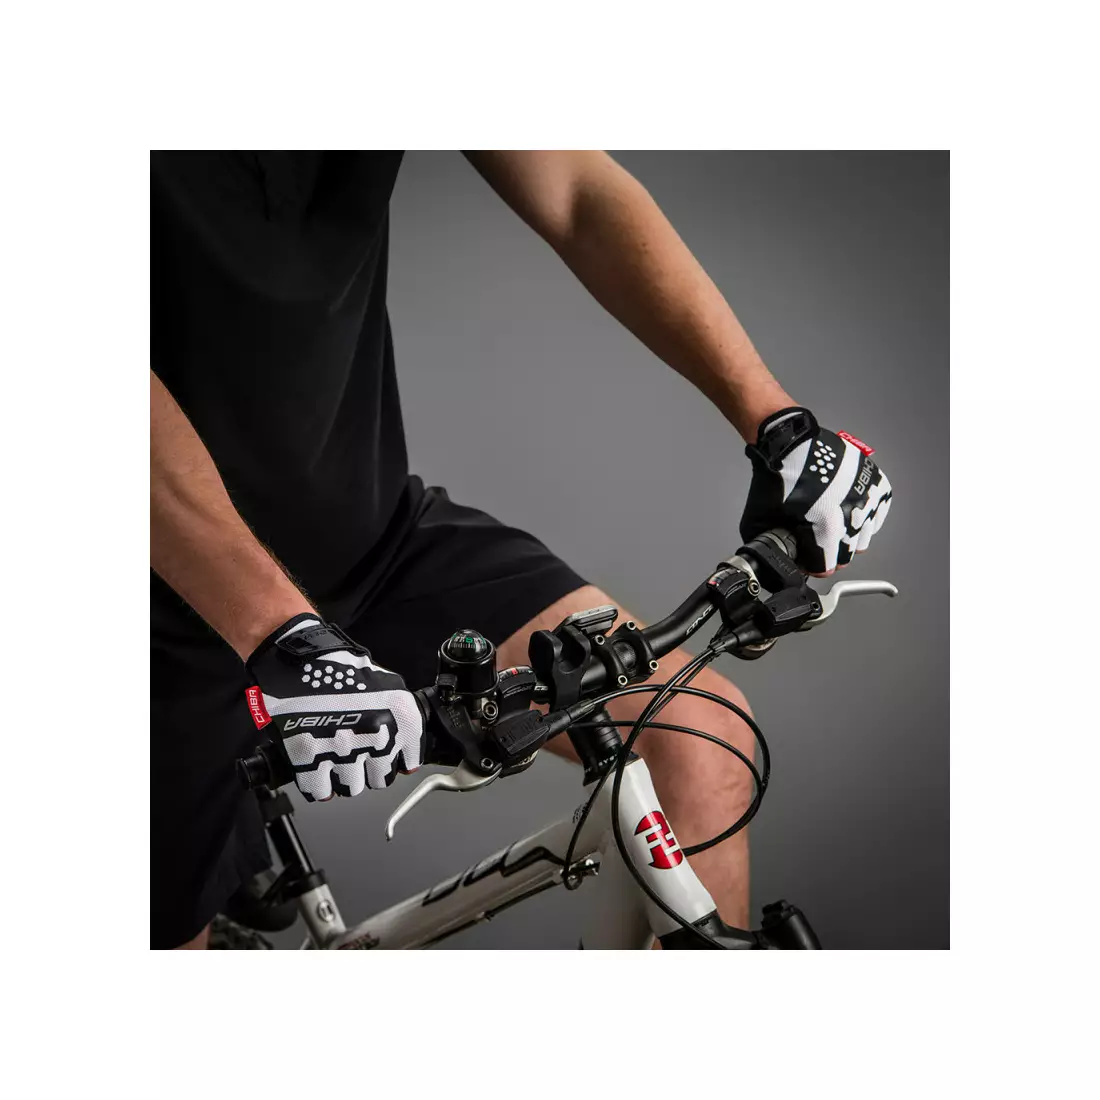 CHIBA PROFESSIONAL II mănuși de ciclism alb negru 3040719